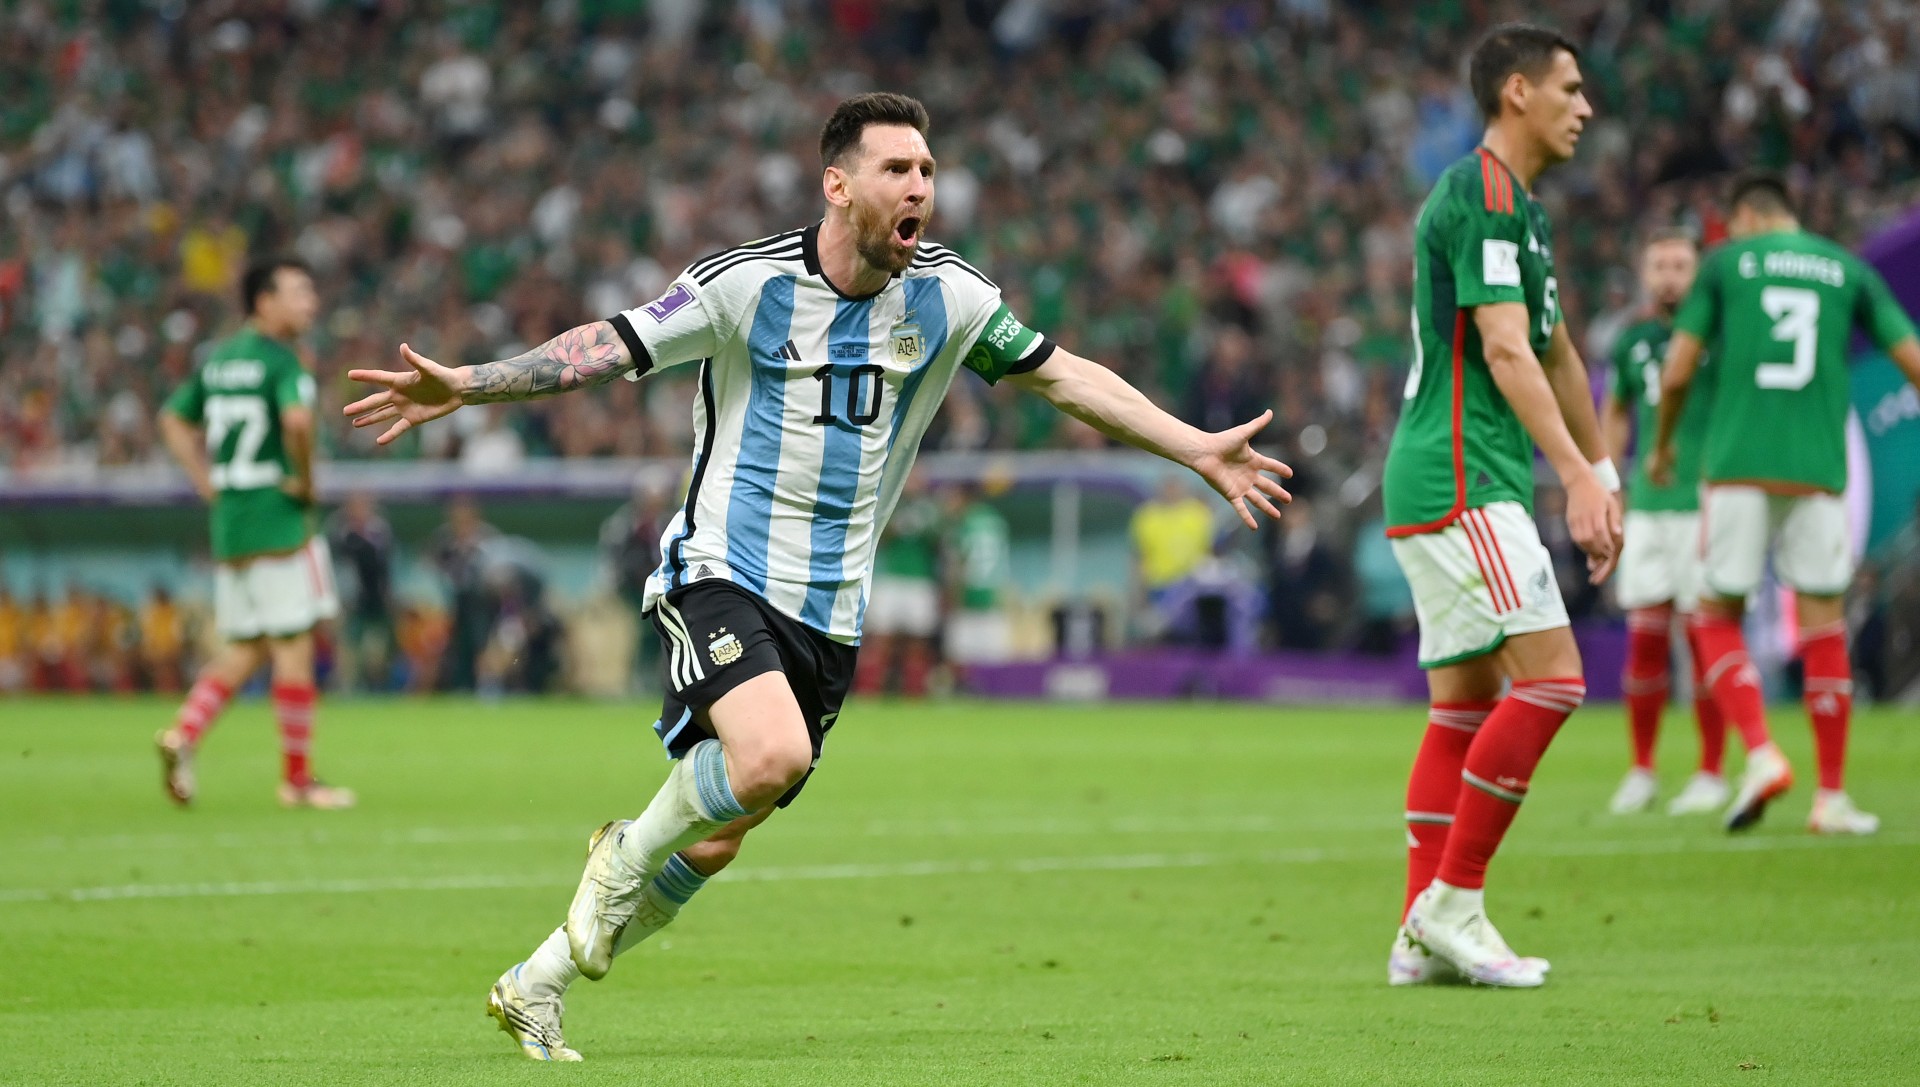 Copa America 2021: Kempes: Messi will never be like Maradona